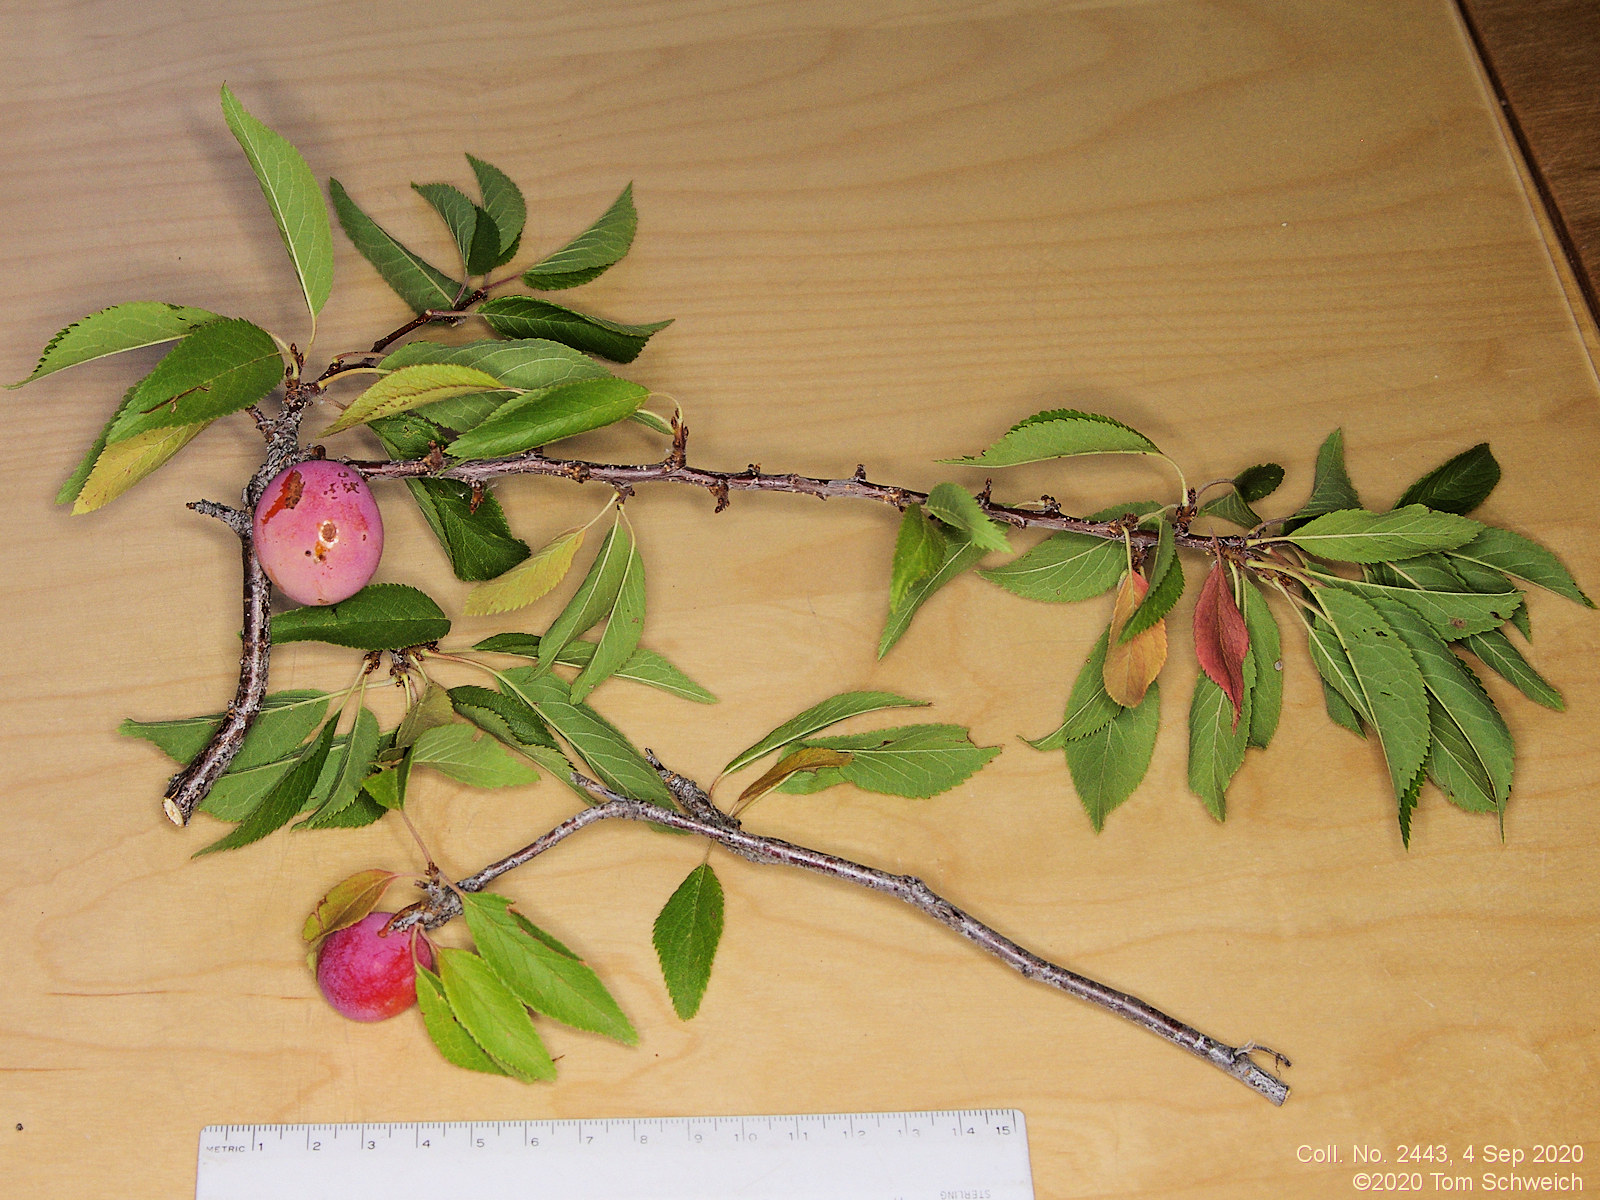 Rosaceae Prunus americana